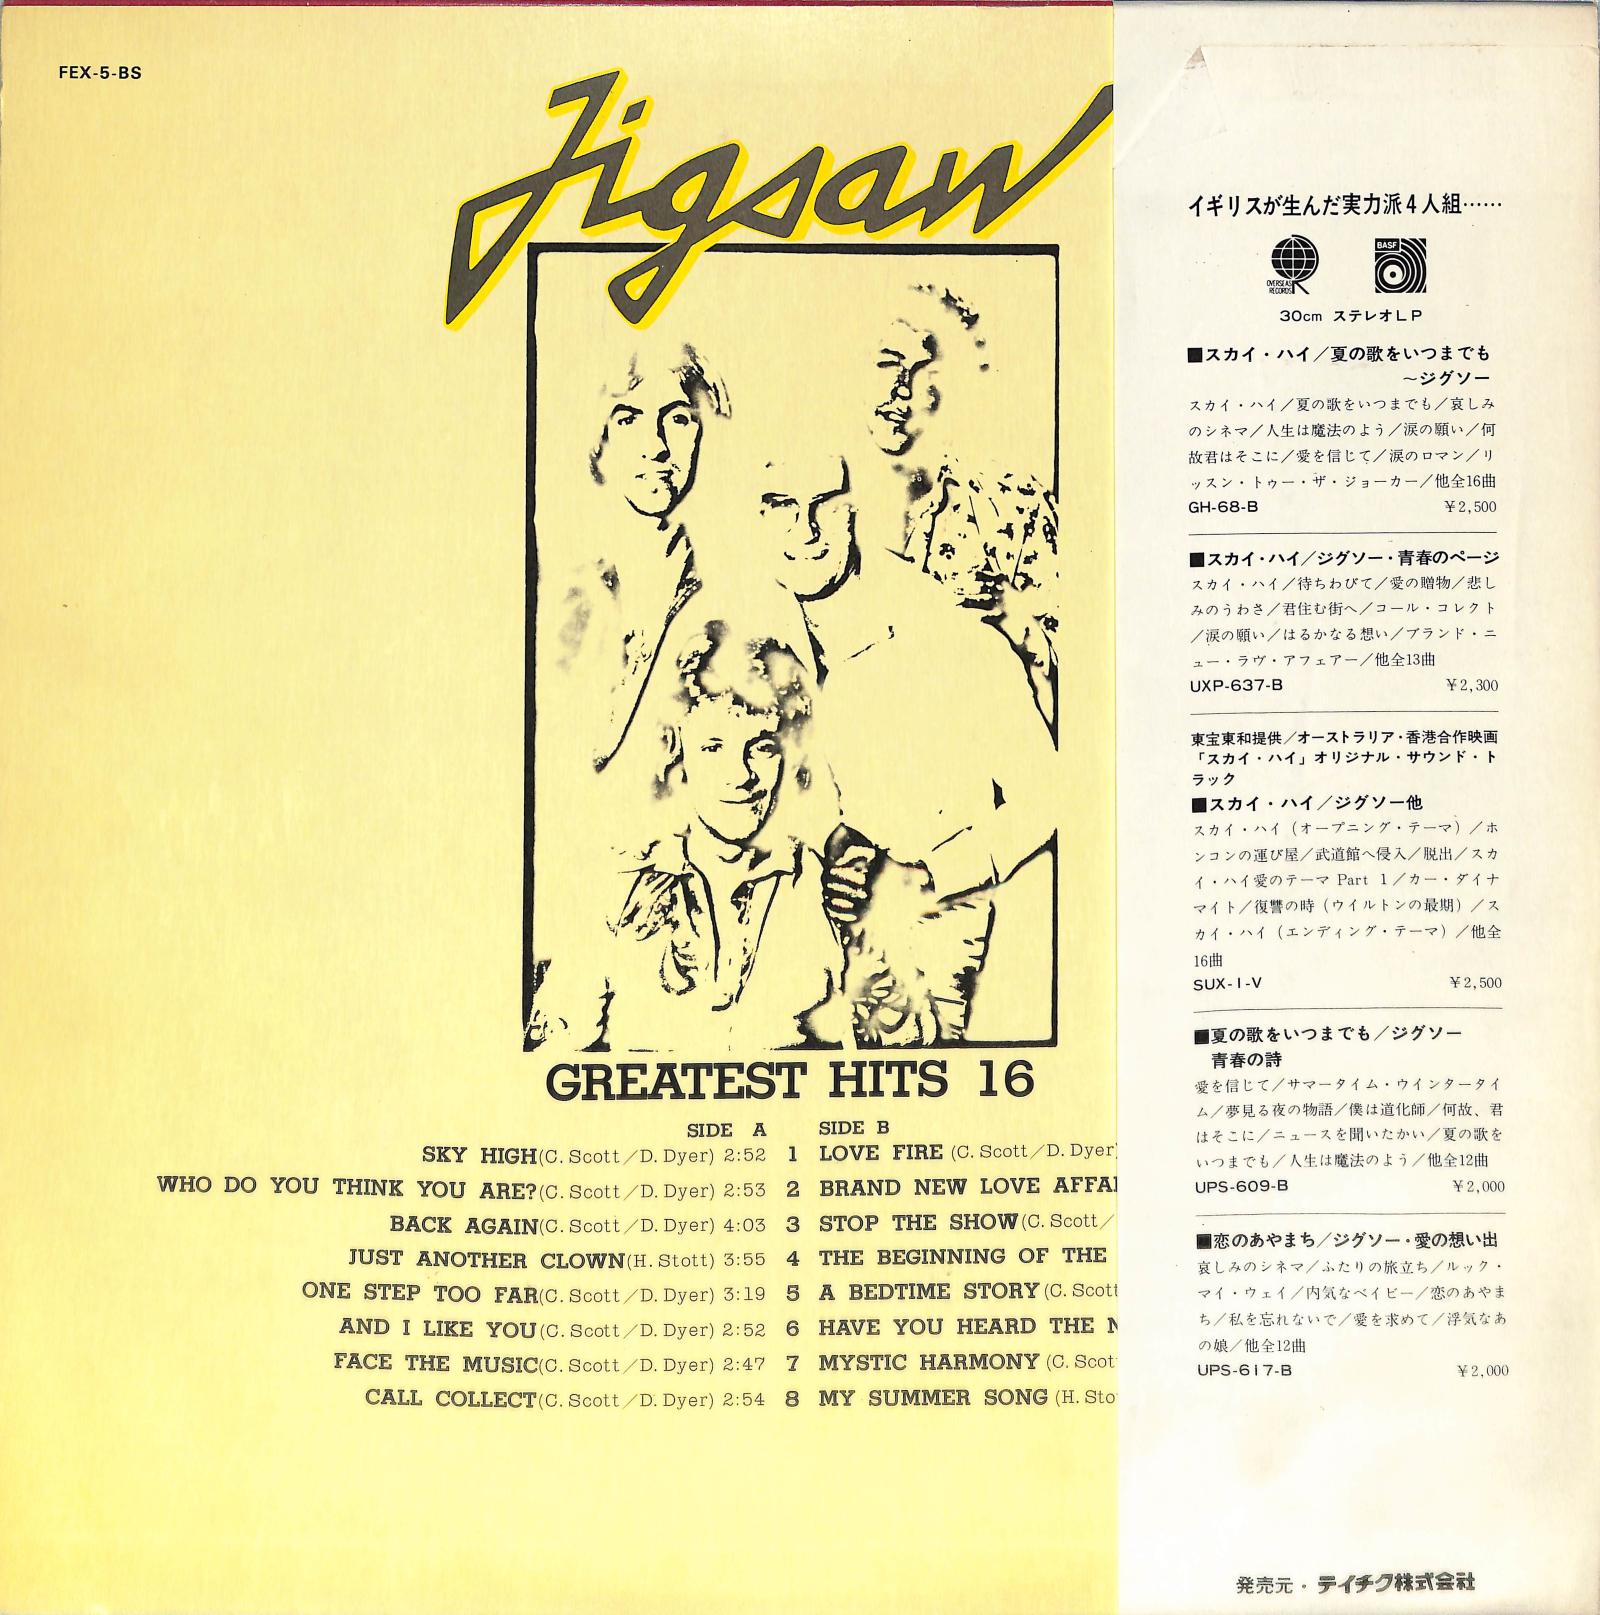 JIGSAW - Greatest Hits 16